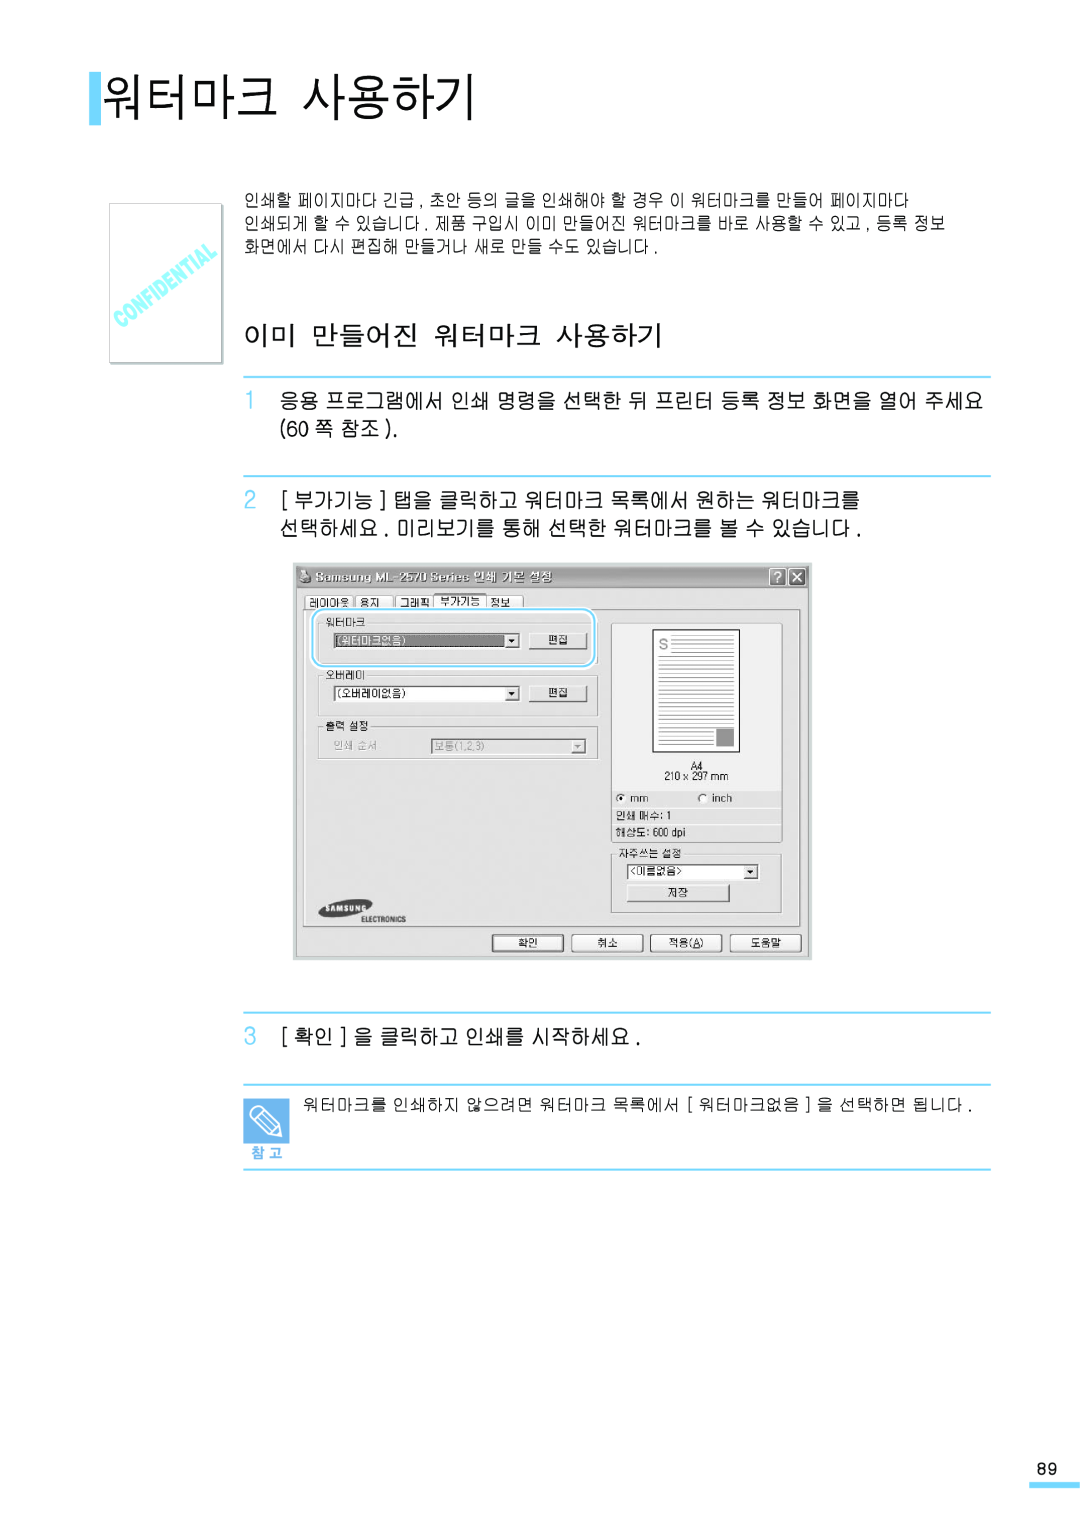 Samsung ML-2571N manual 이미 만들어진 워터마크 사용하기, 1 응용 프로그램에서 인쇄 명령을 선택한 뒤 프린터 등록 정보 화면을 열어 주세요 60 쪽 참조, 3 확인 을 클릭하고 인쇄를 시작하세요 